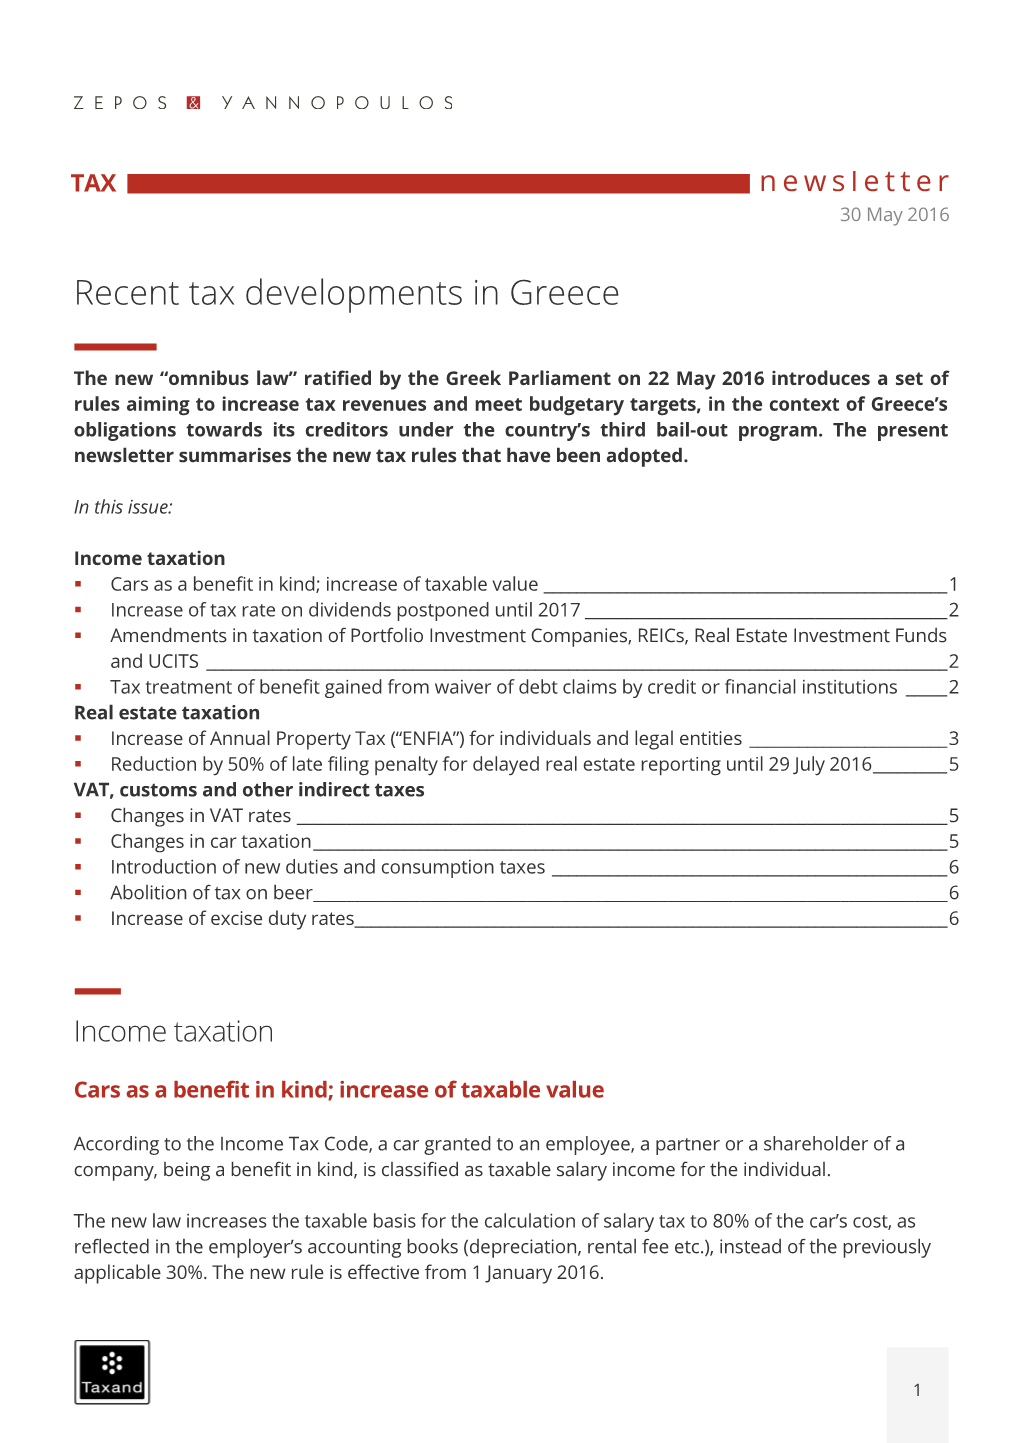 Recent Tax Developments in Greece